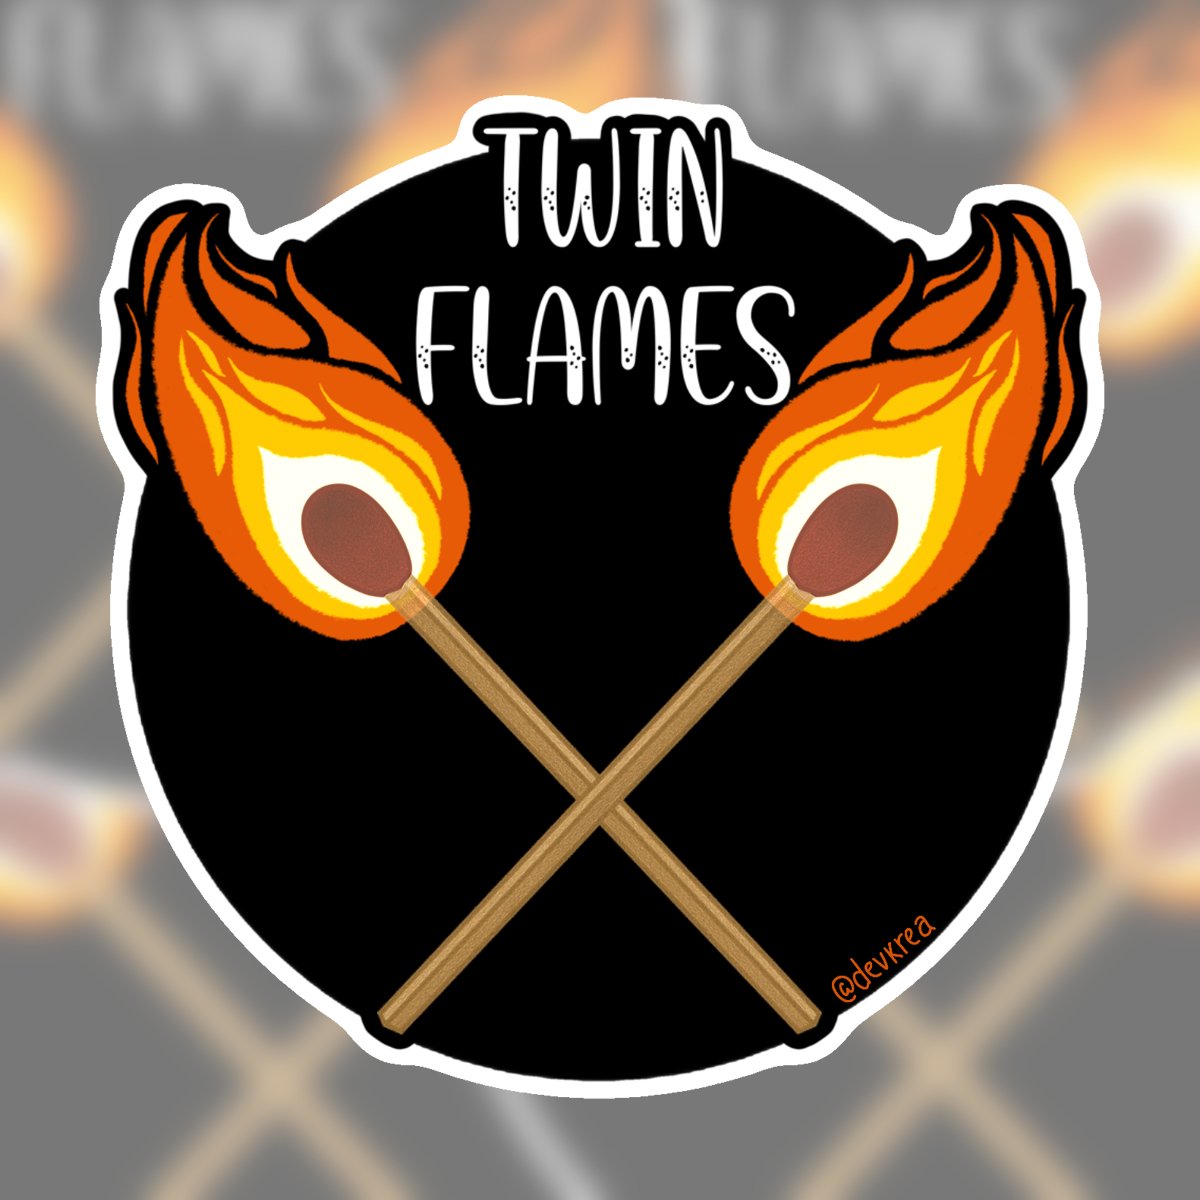 Twin Flames 3" Vinyl | Deviant Kreations - Deviantkreations